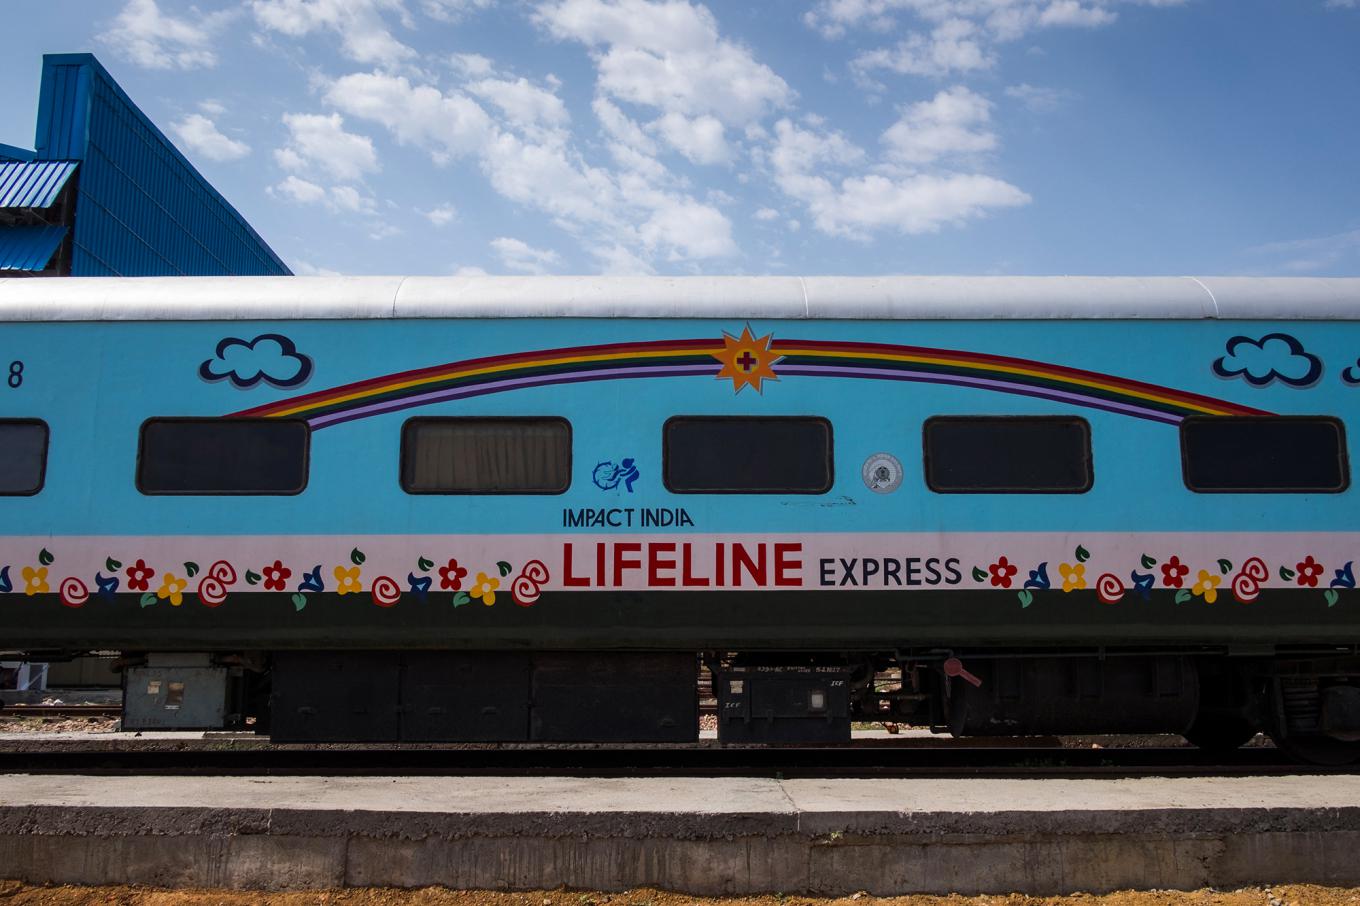 The Lifeline Express Magic Train Of India I Genius Entrepreneurship And Social Innnovation